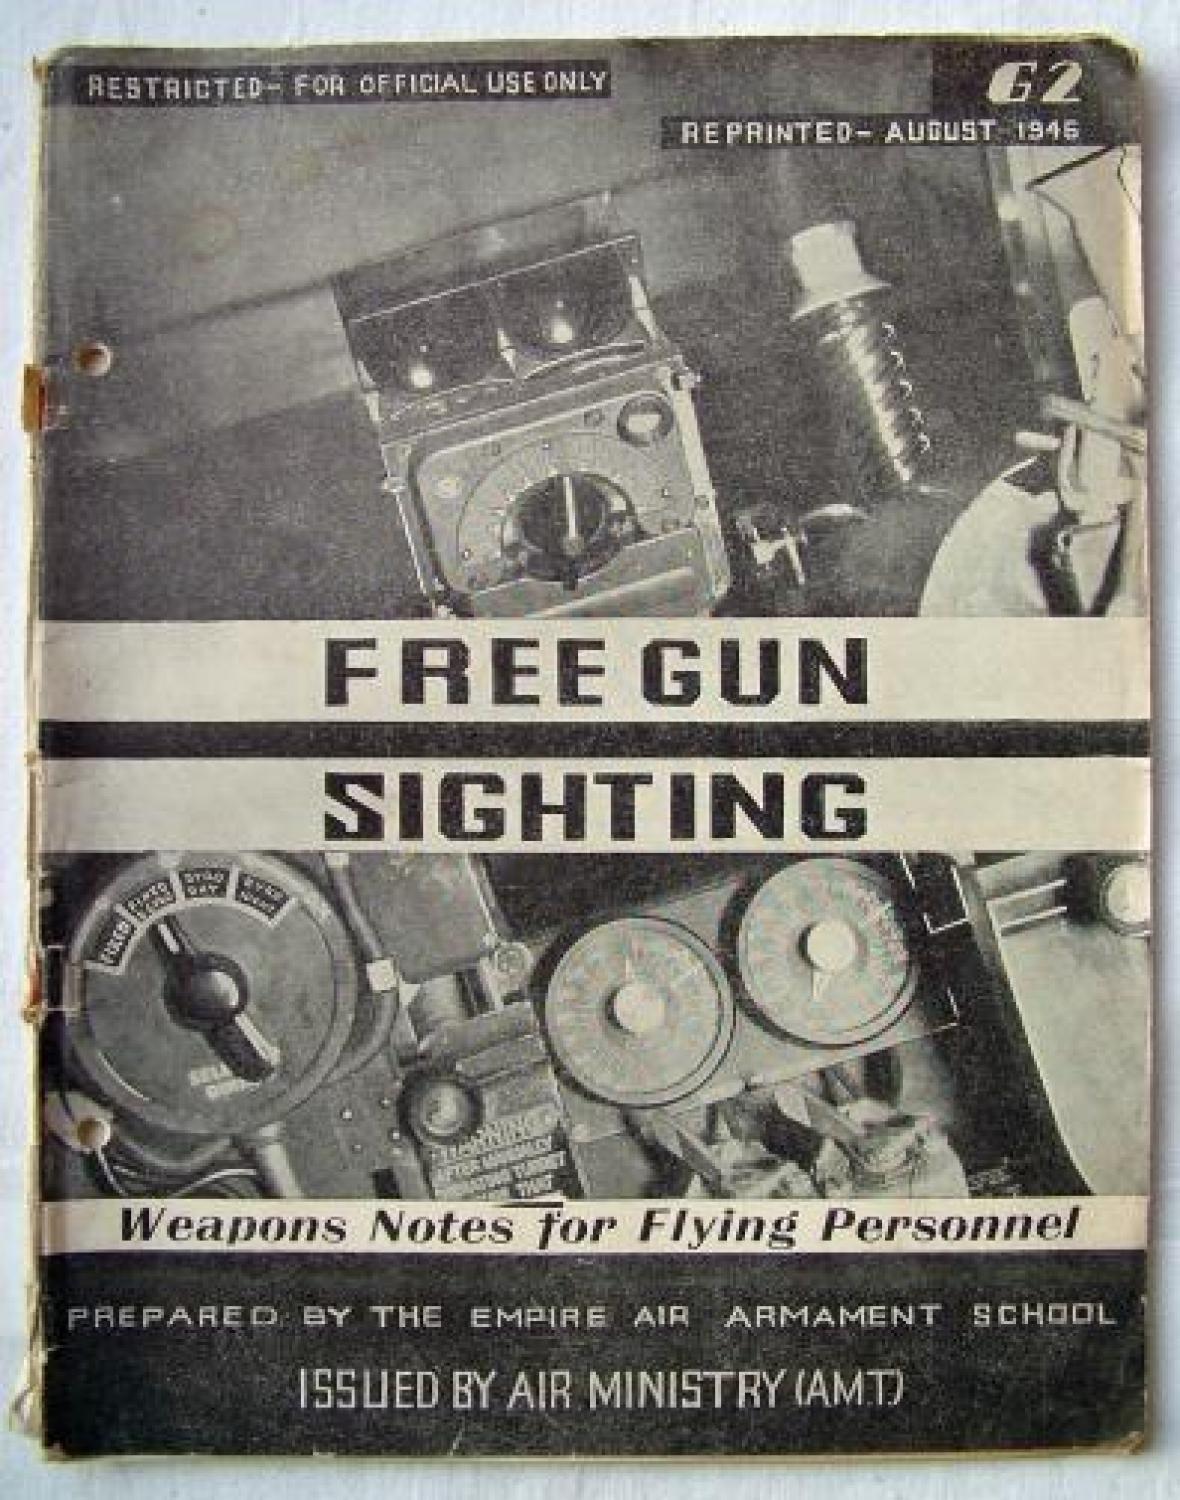 R.A.F. - Free Gun Sighting